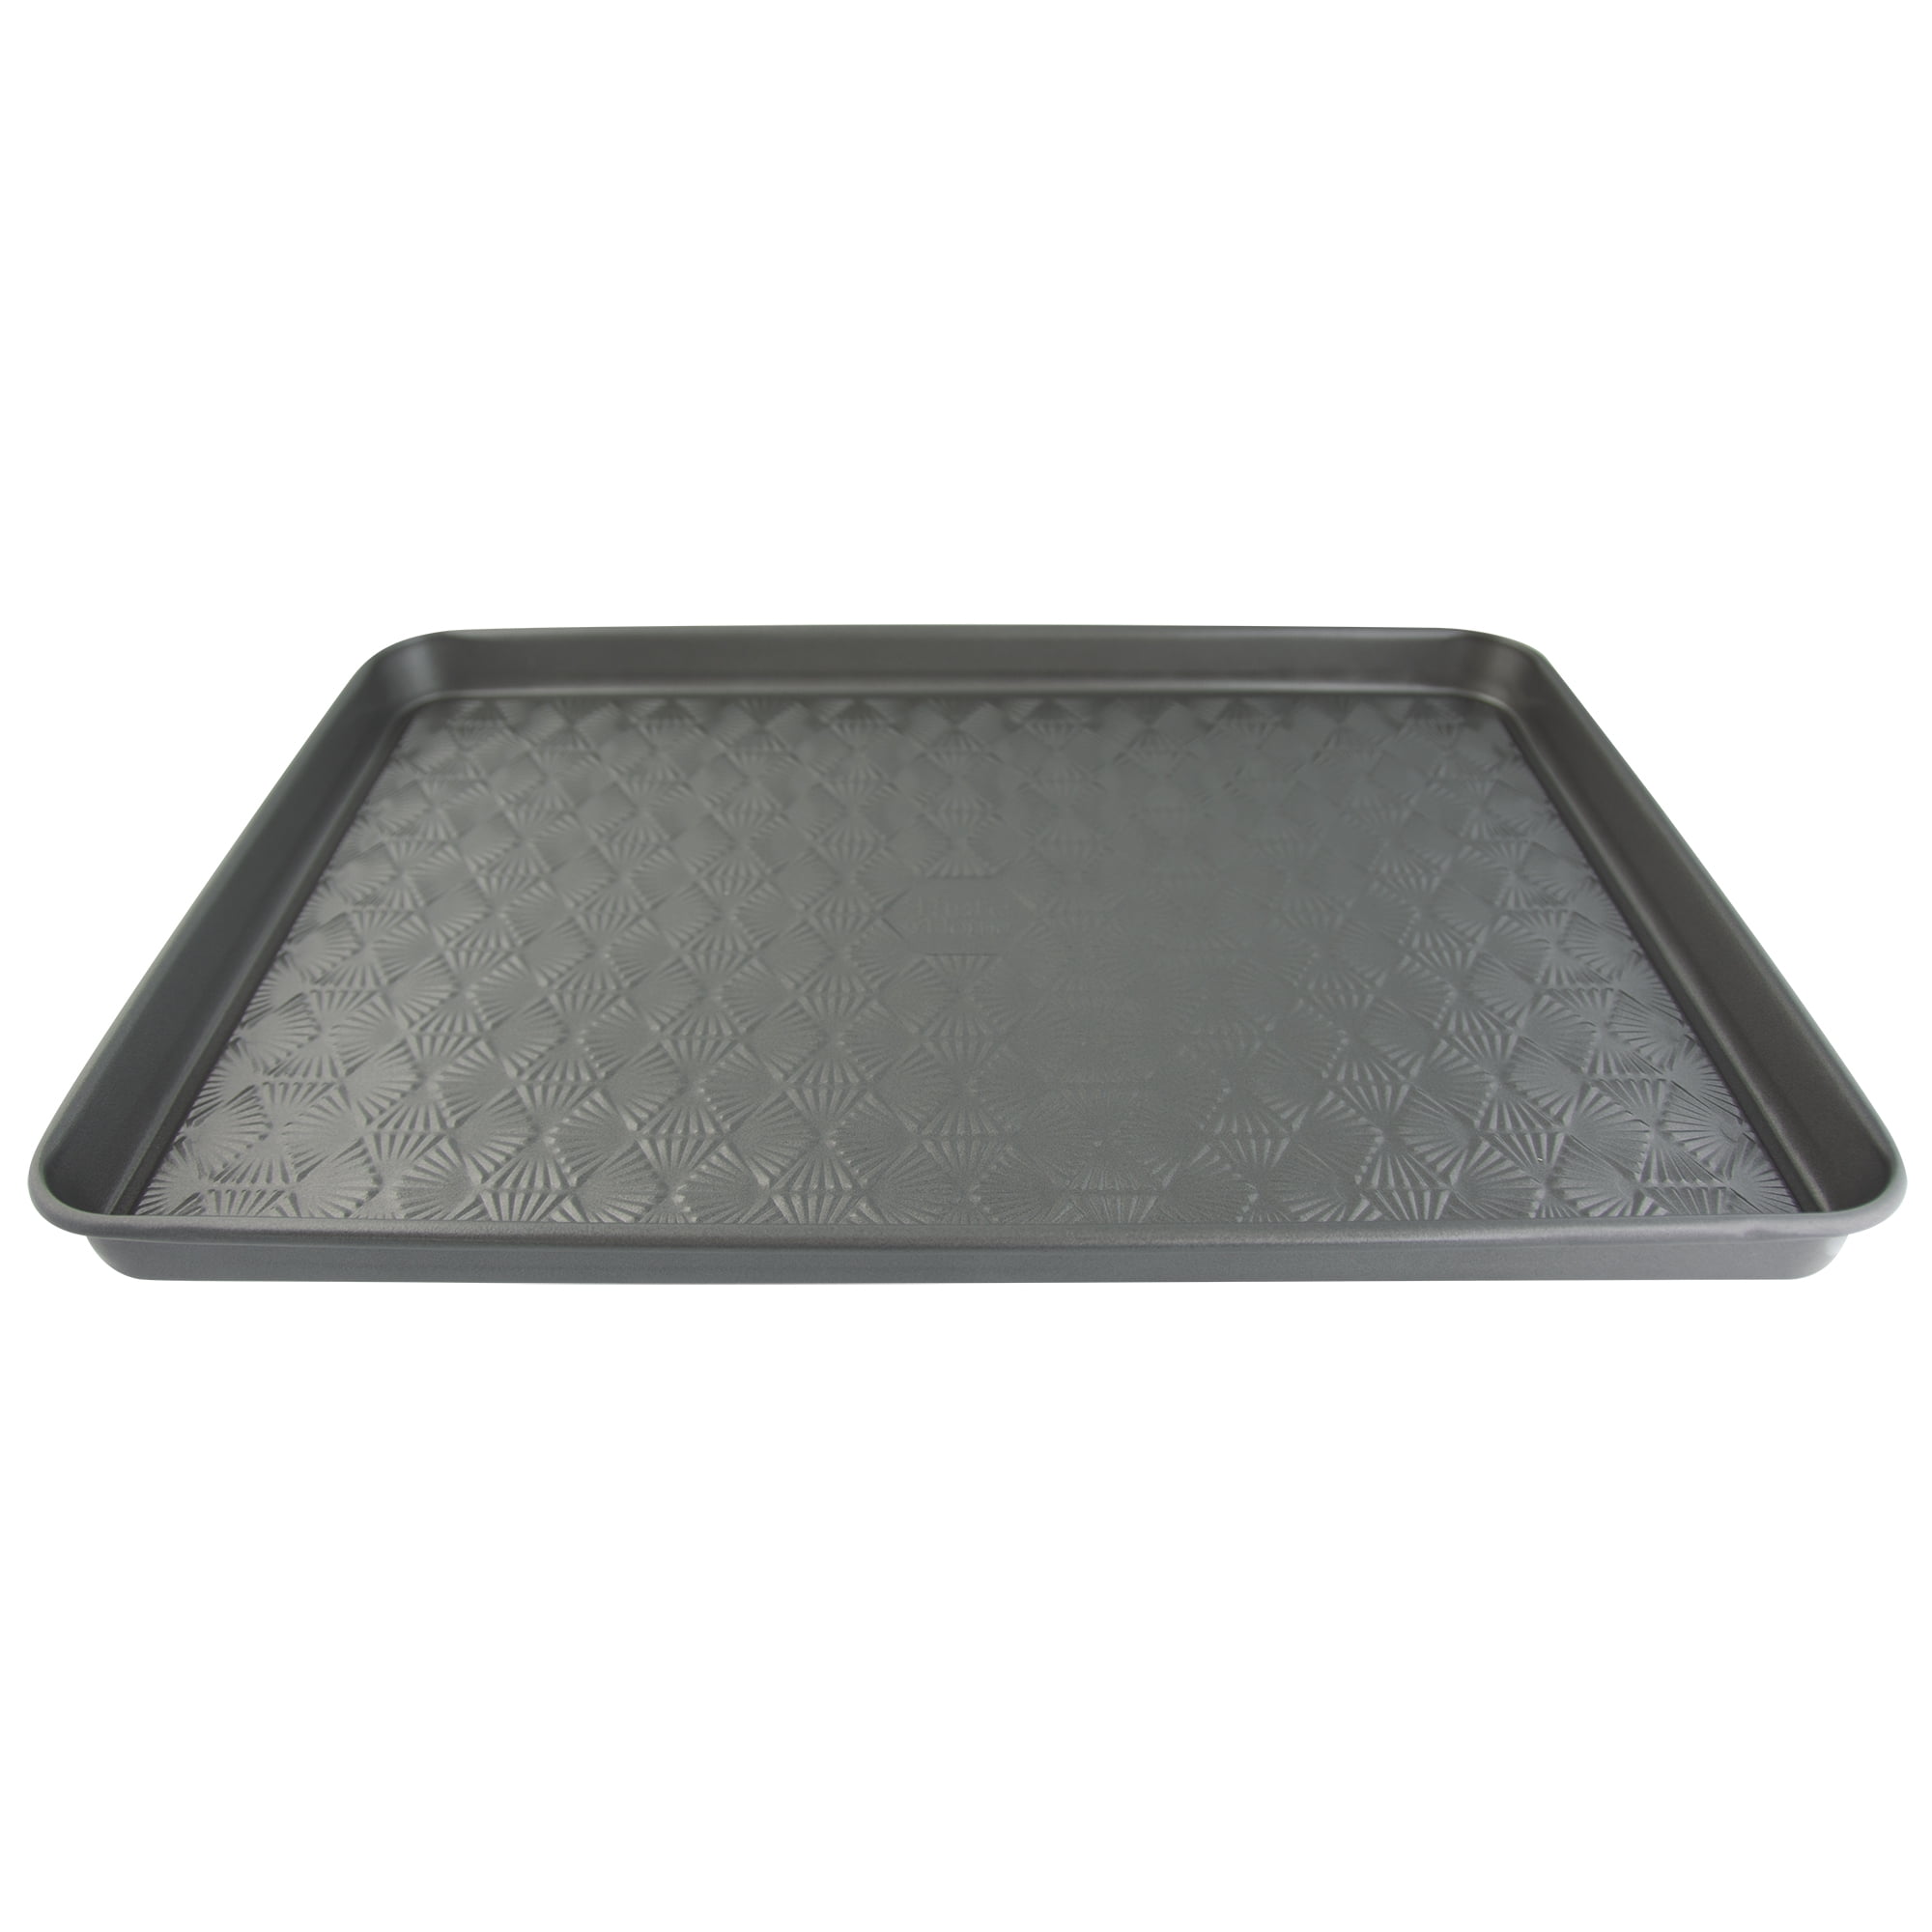 Taste of Home® 13 x 9 inch Non-Stick Metal Baking Pan